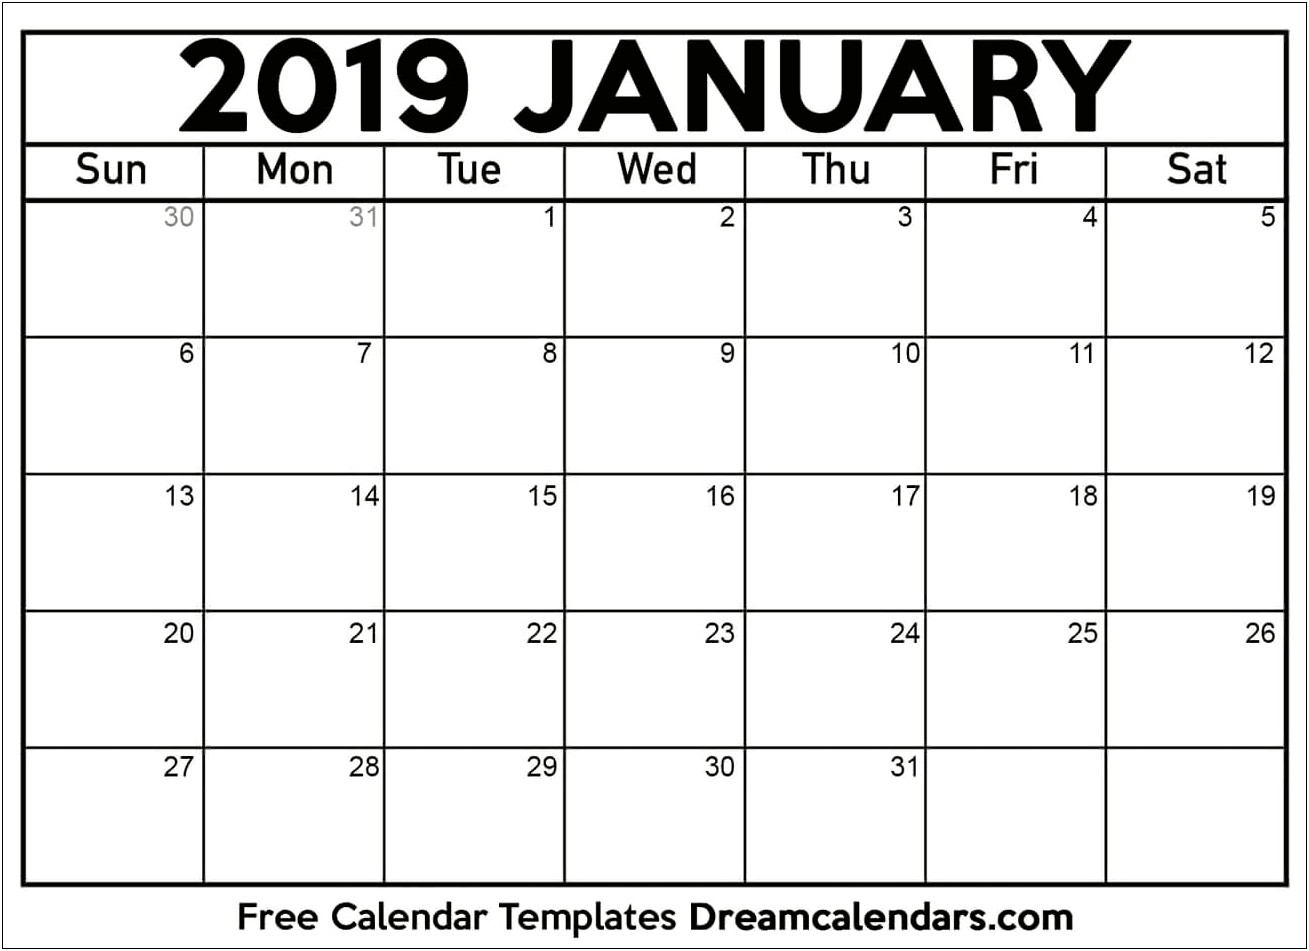 January 2019 Calendar Template In Word